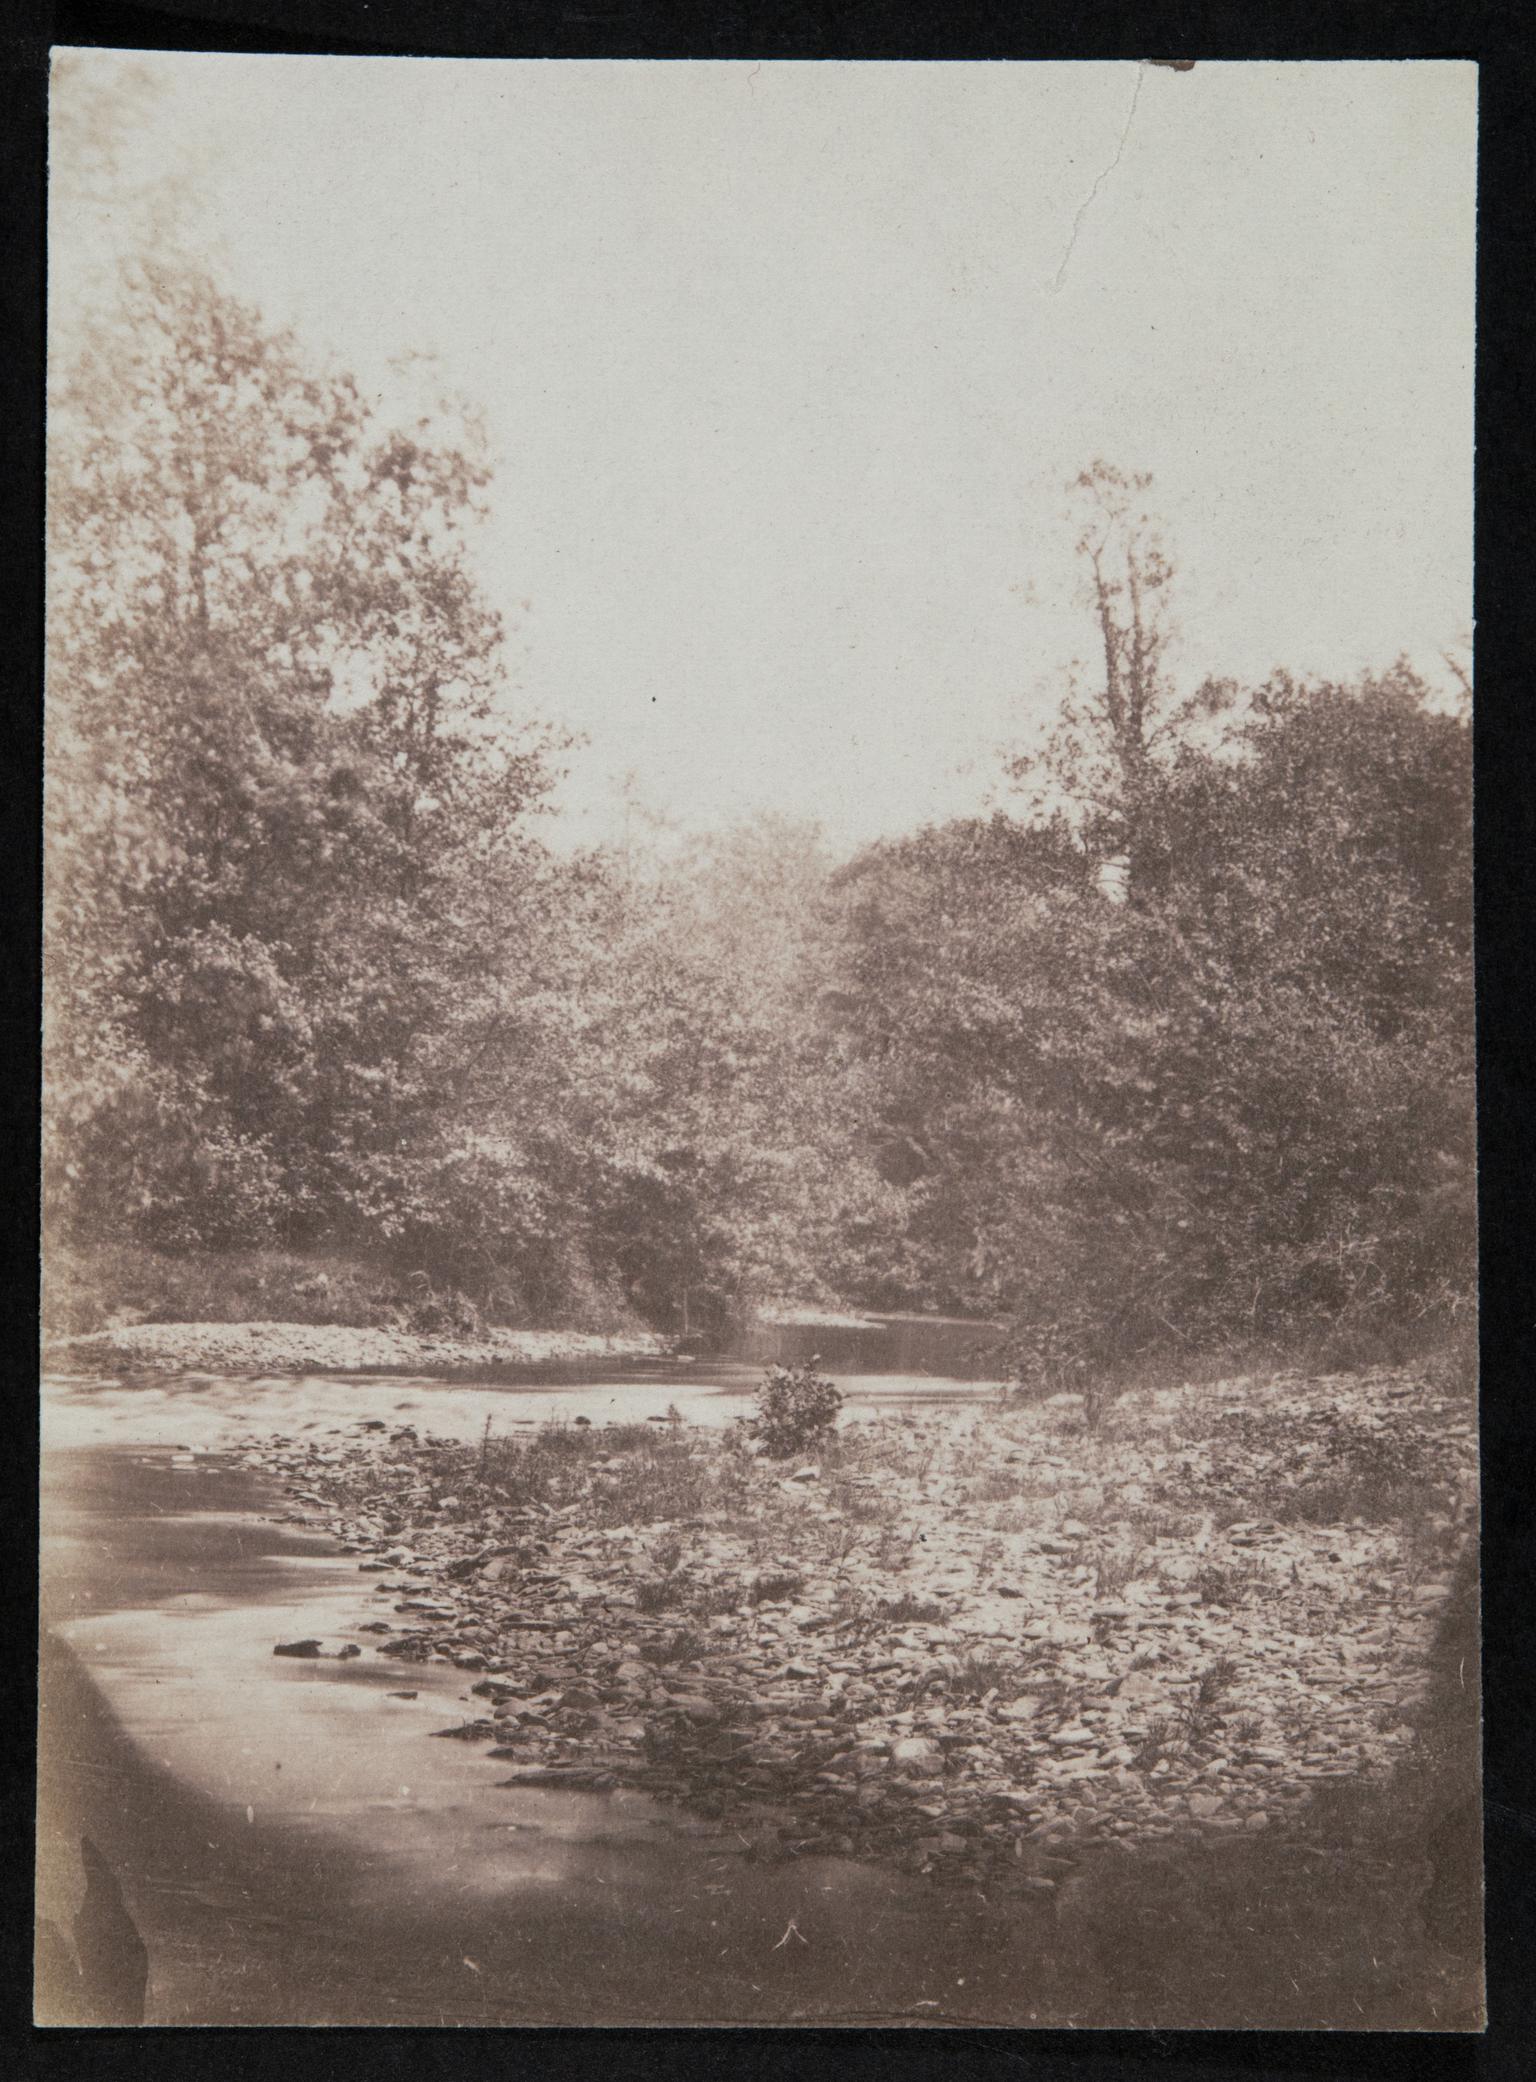 Stream running through woods, photograph